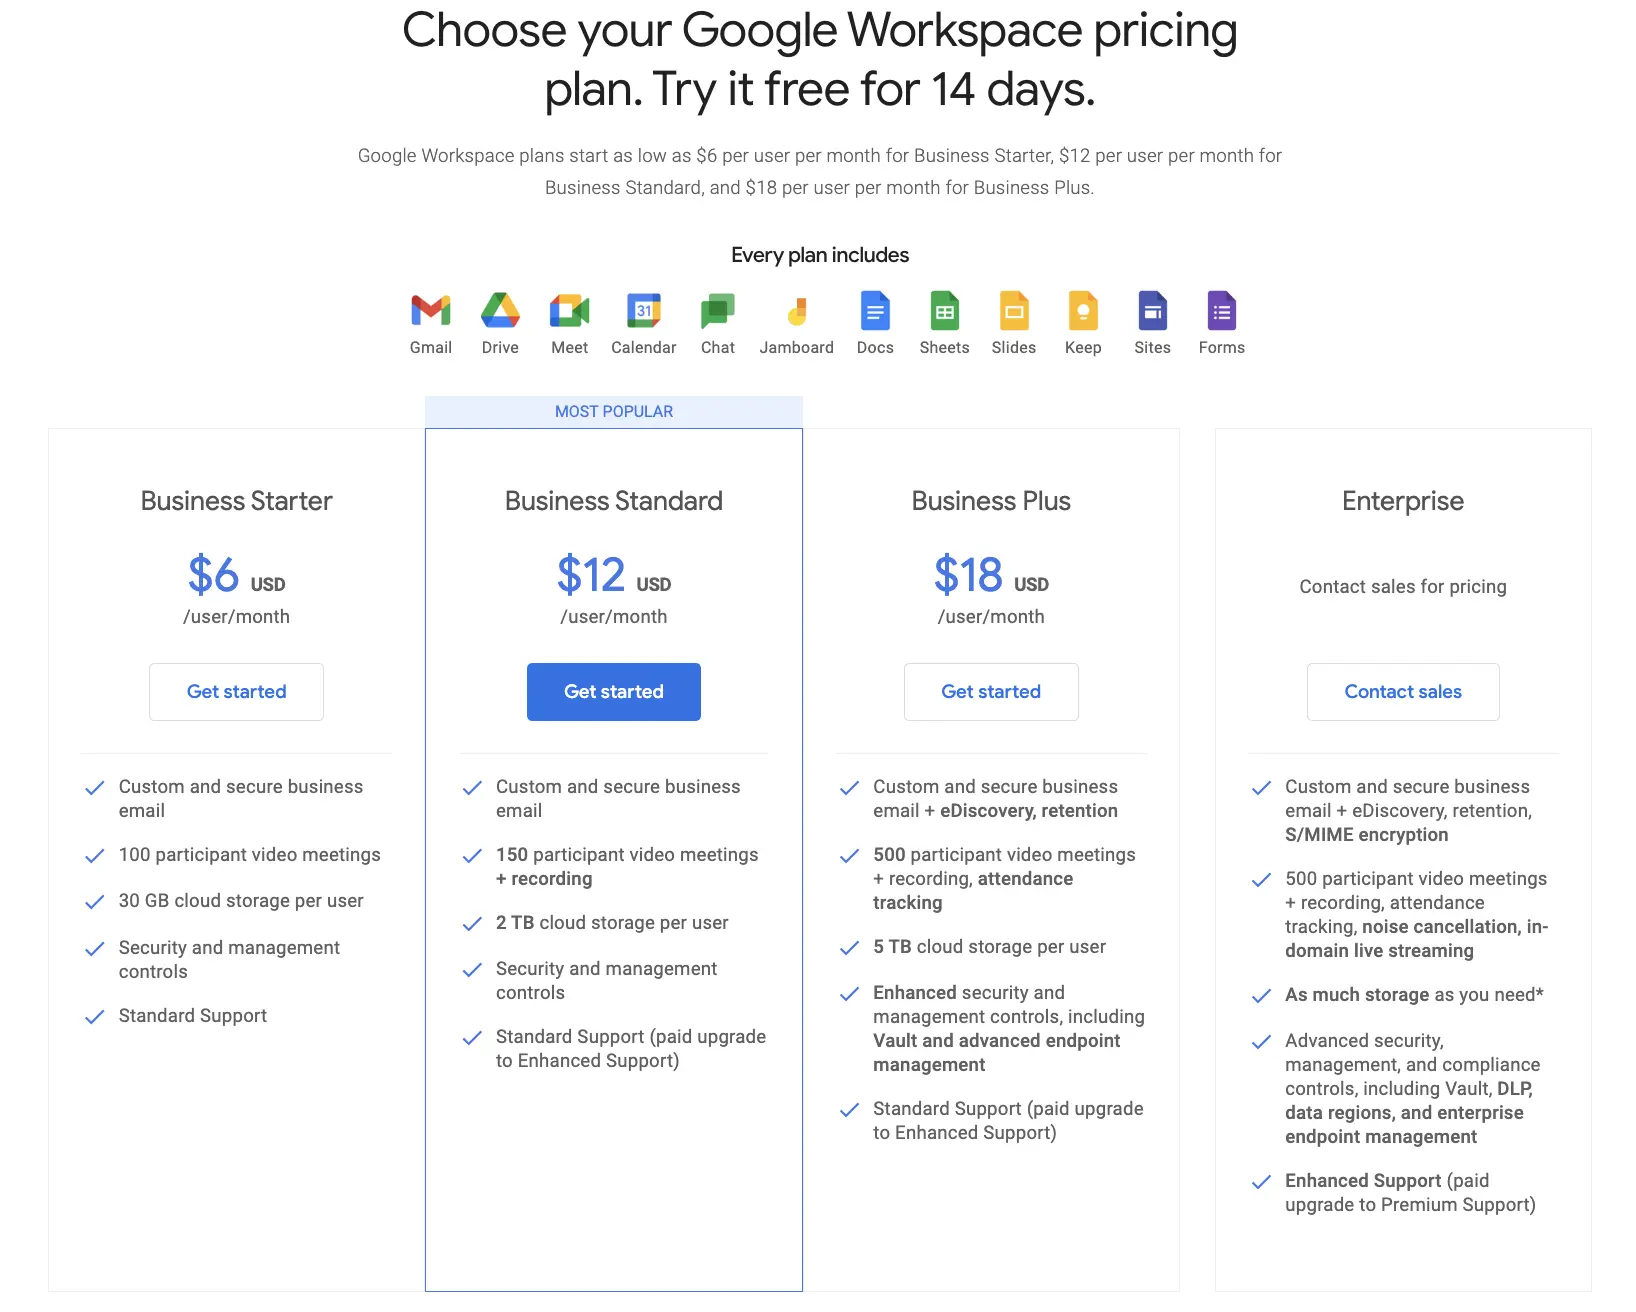 Is Google Workspace Free?